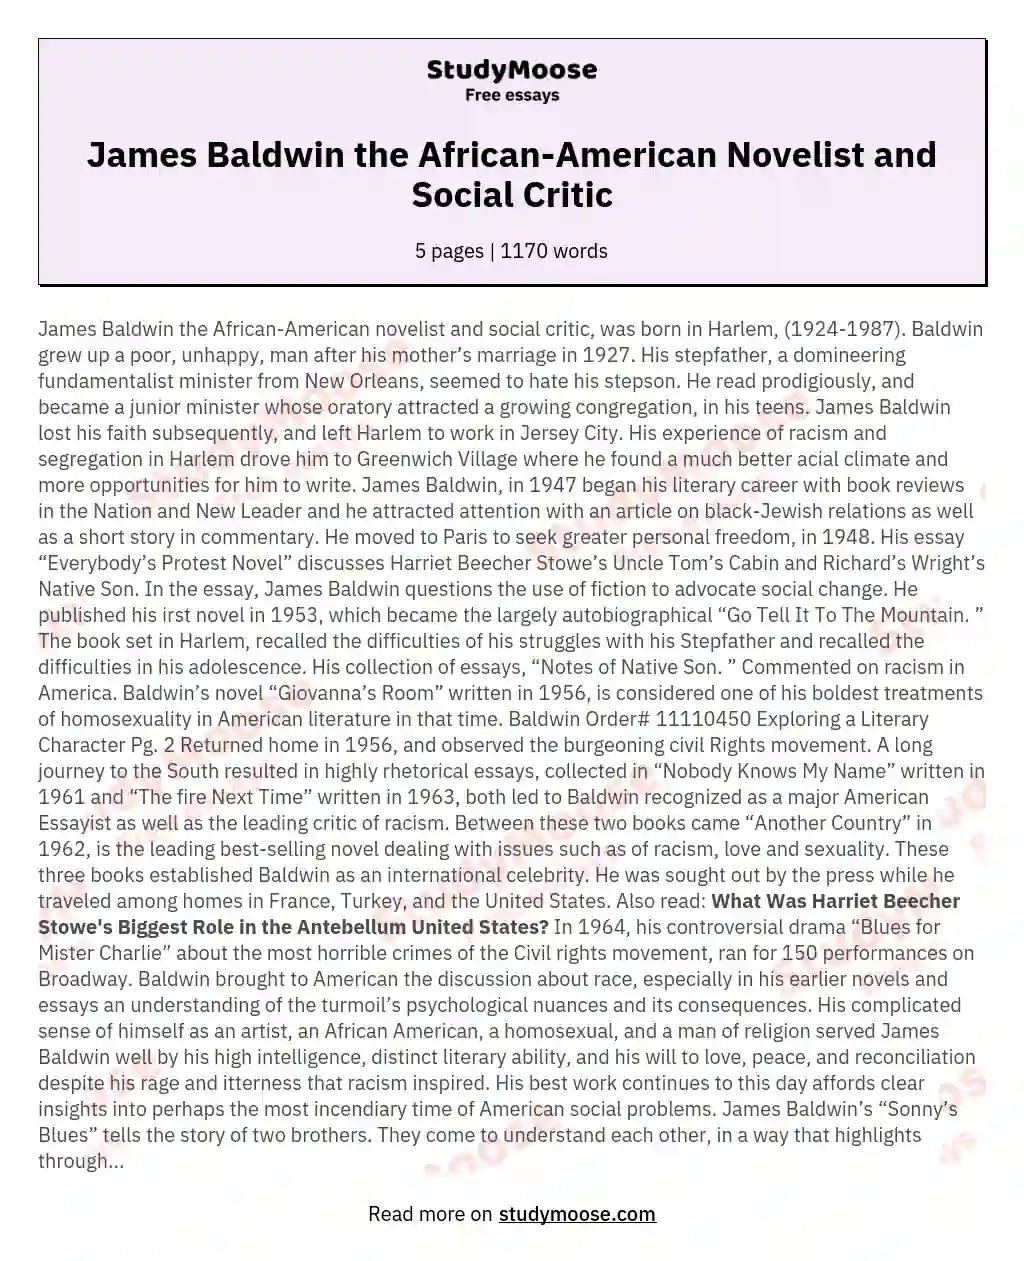 James Baldwin the African-American Novelist and Social Critic essay